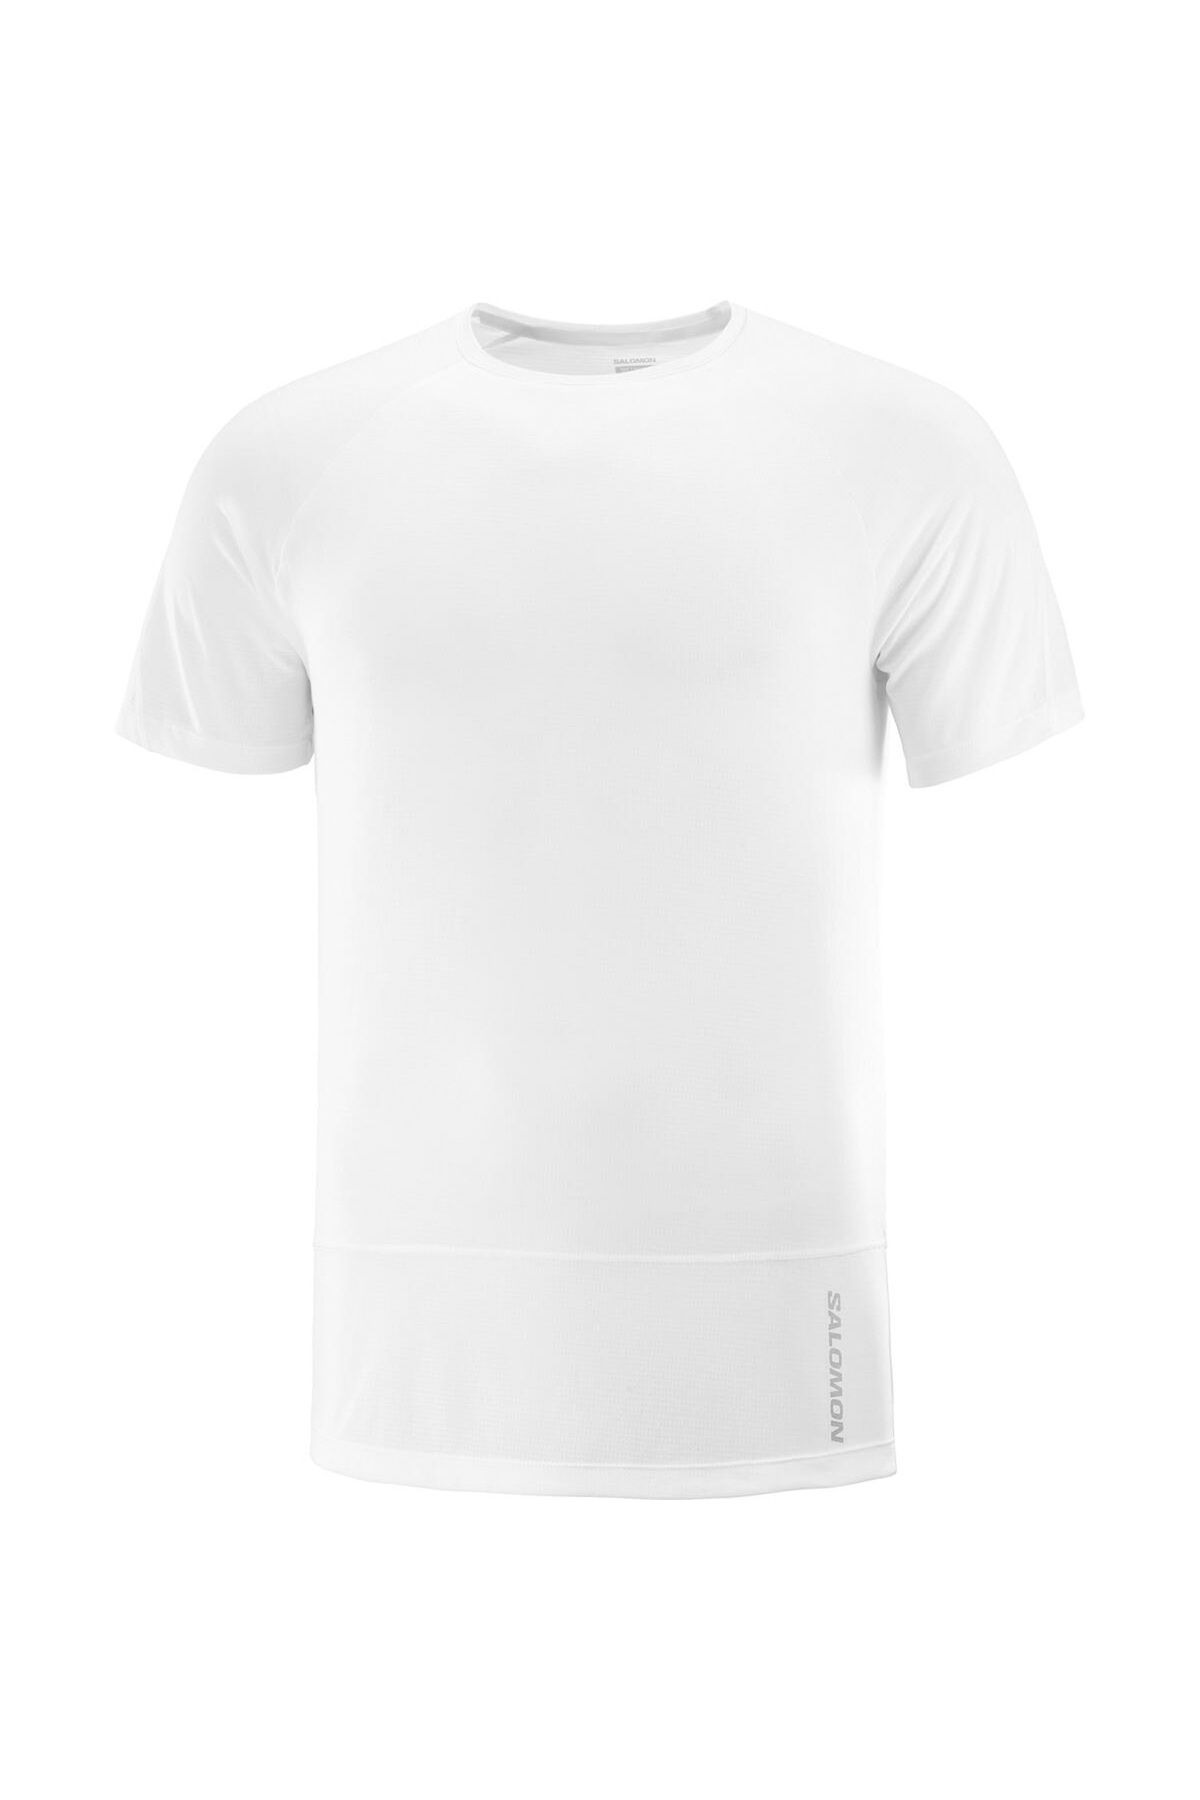 Salomon Spor T-Shirt